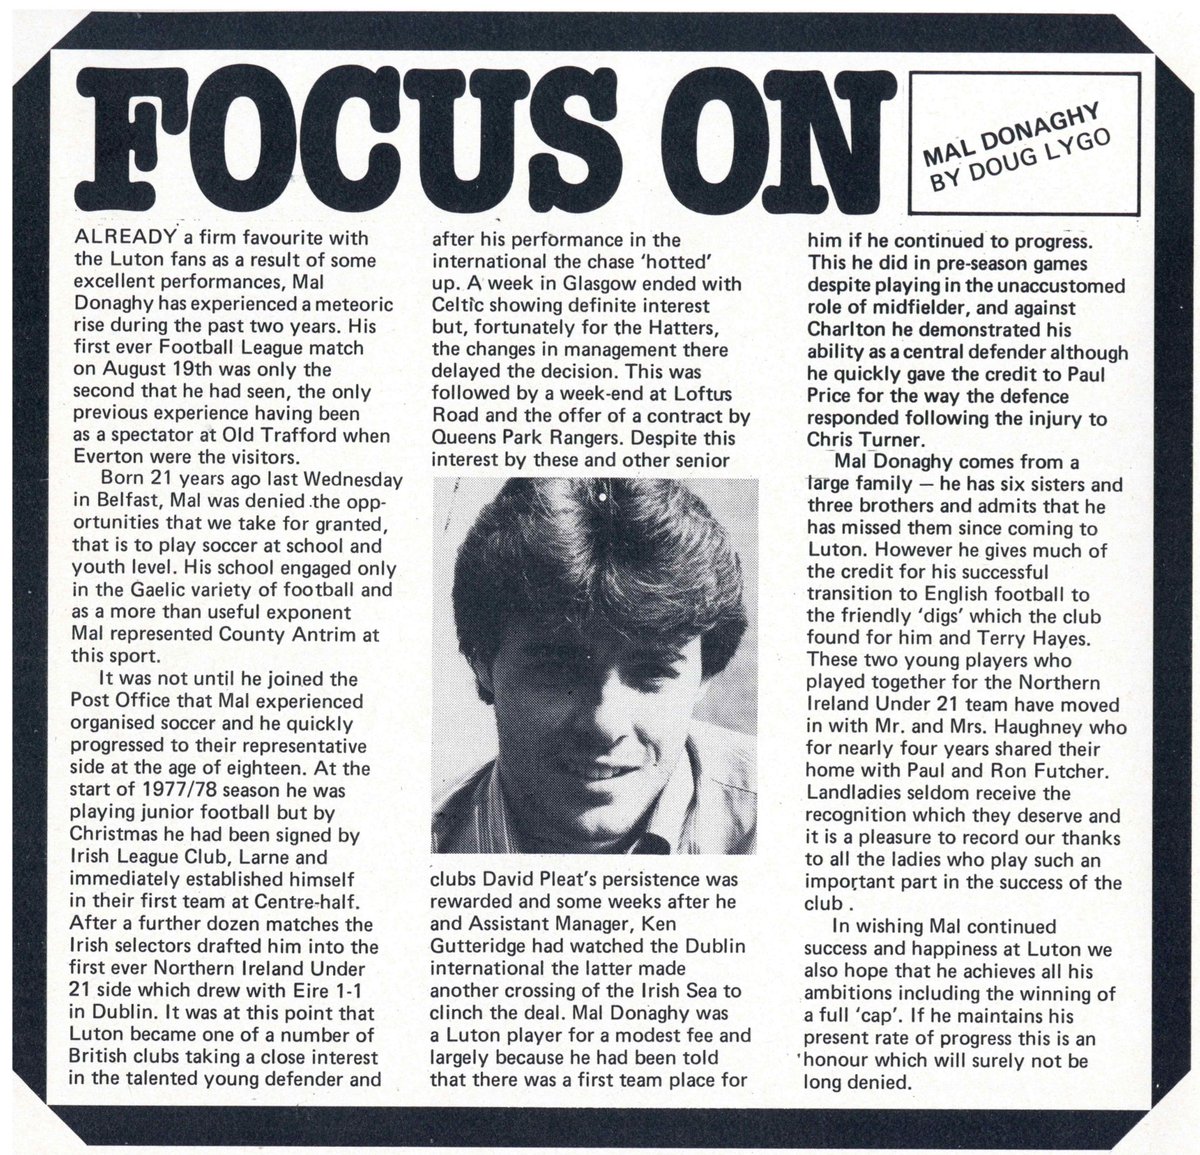 Focus on...Mal Donaghy (1978)